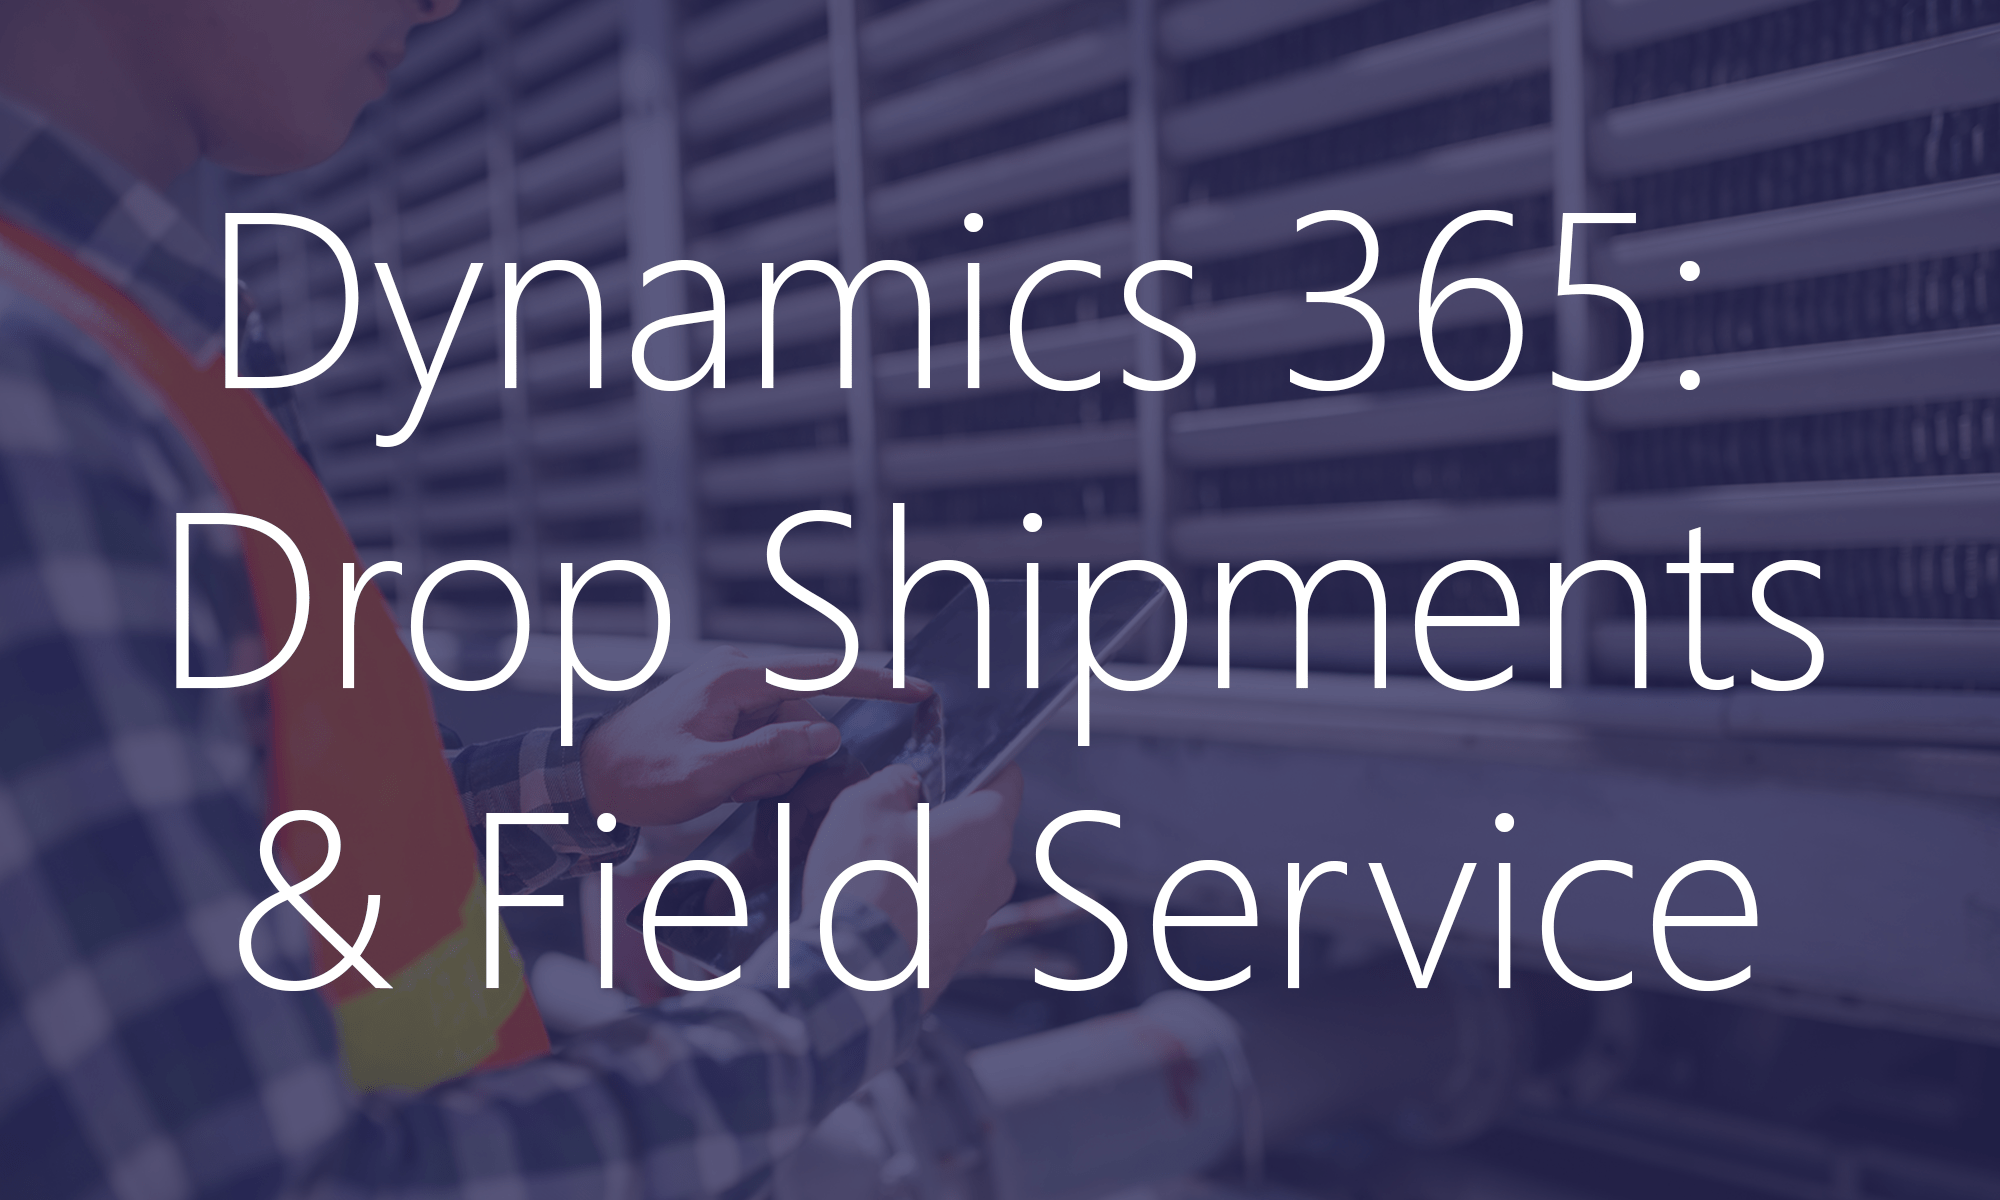 Dynamics 365 drop shipments and field service